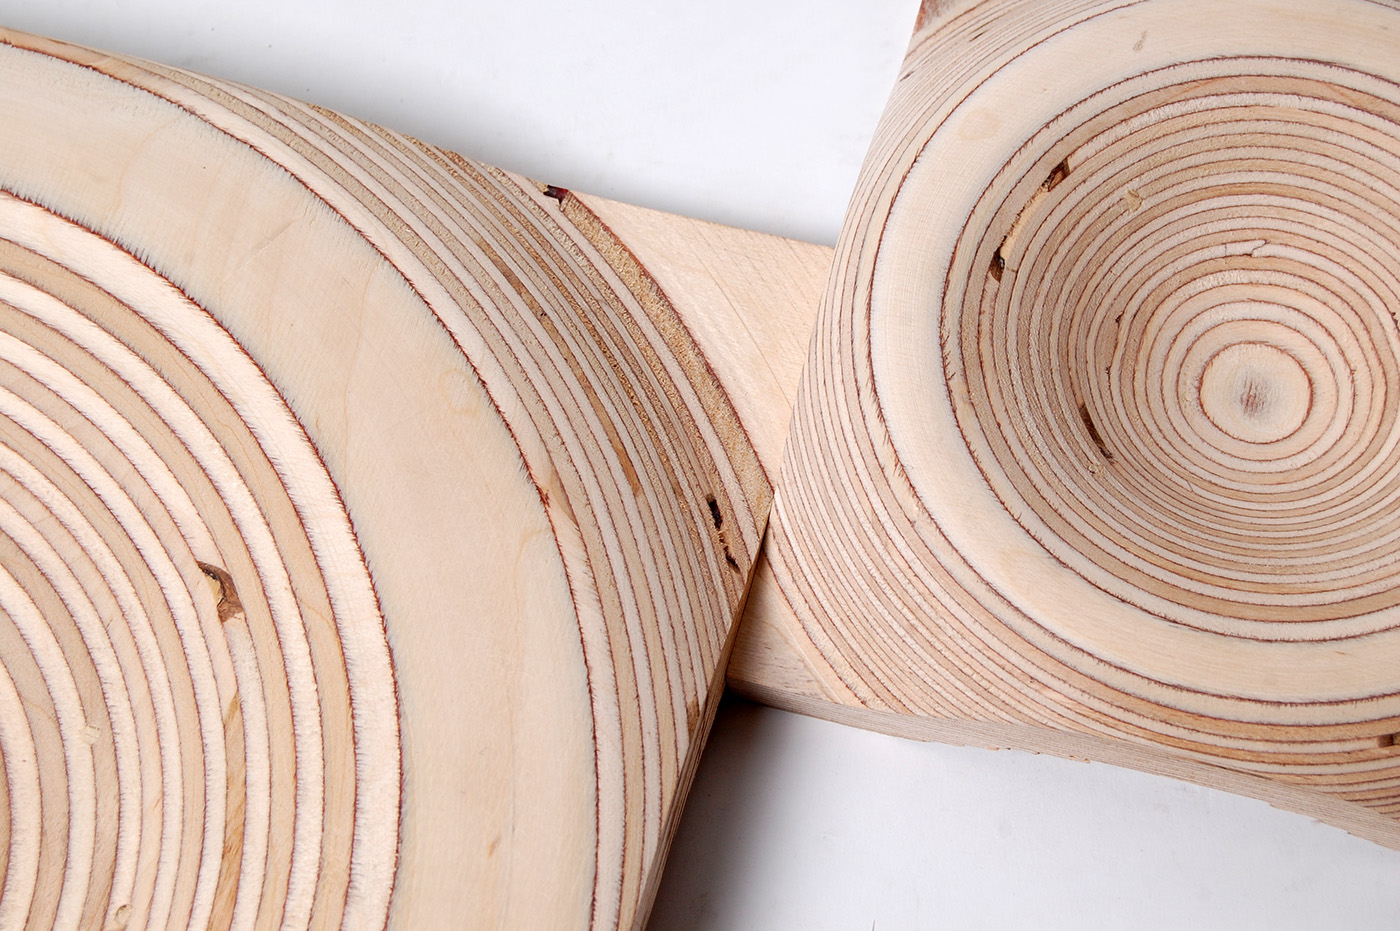 design plates dishes plywood future fantastic